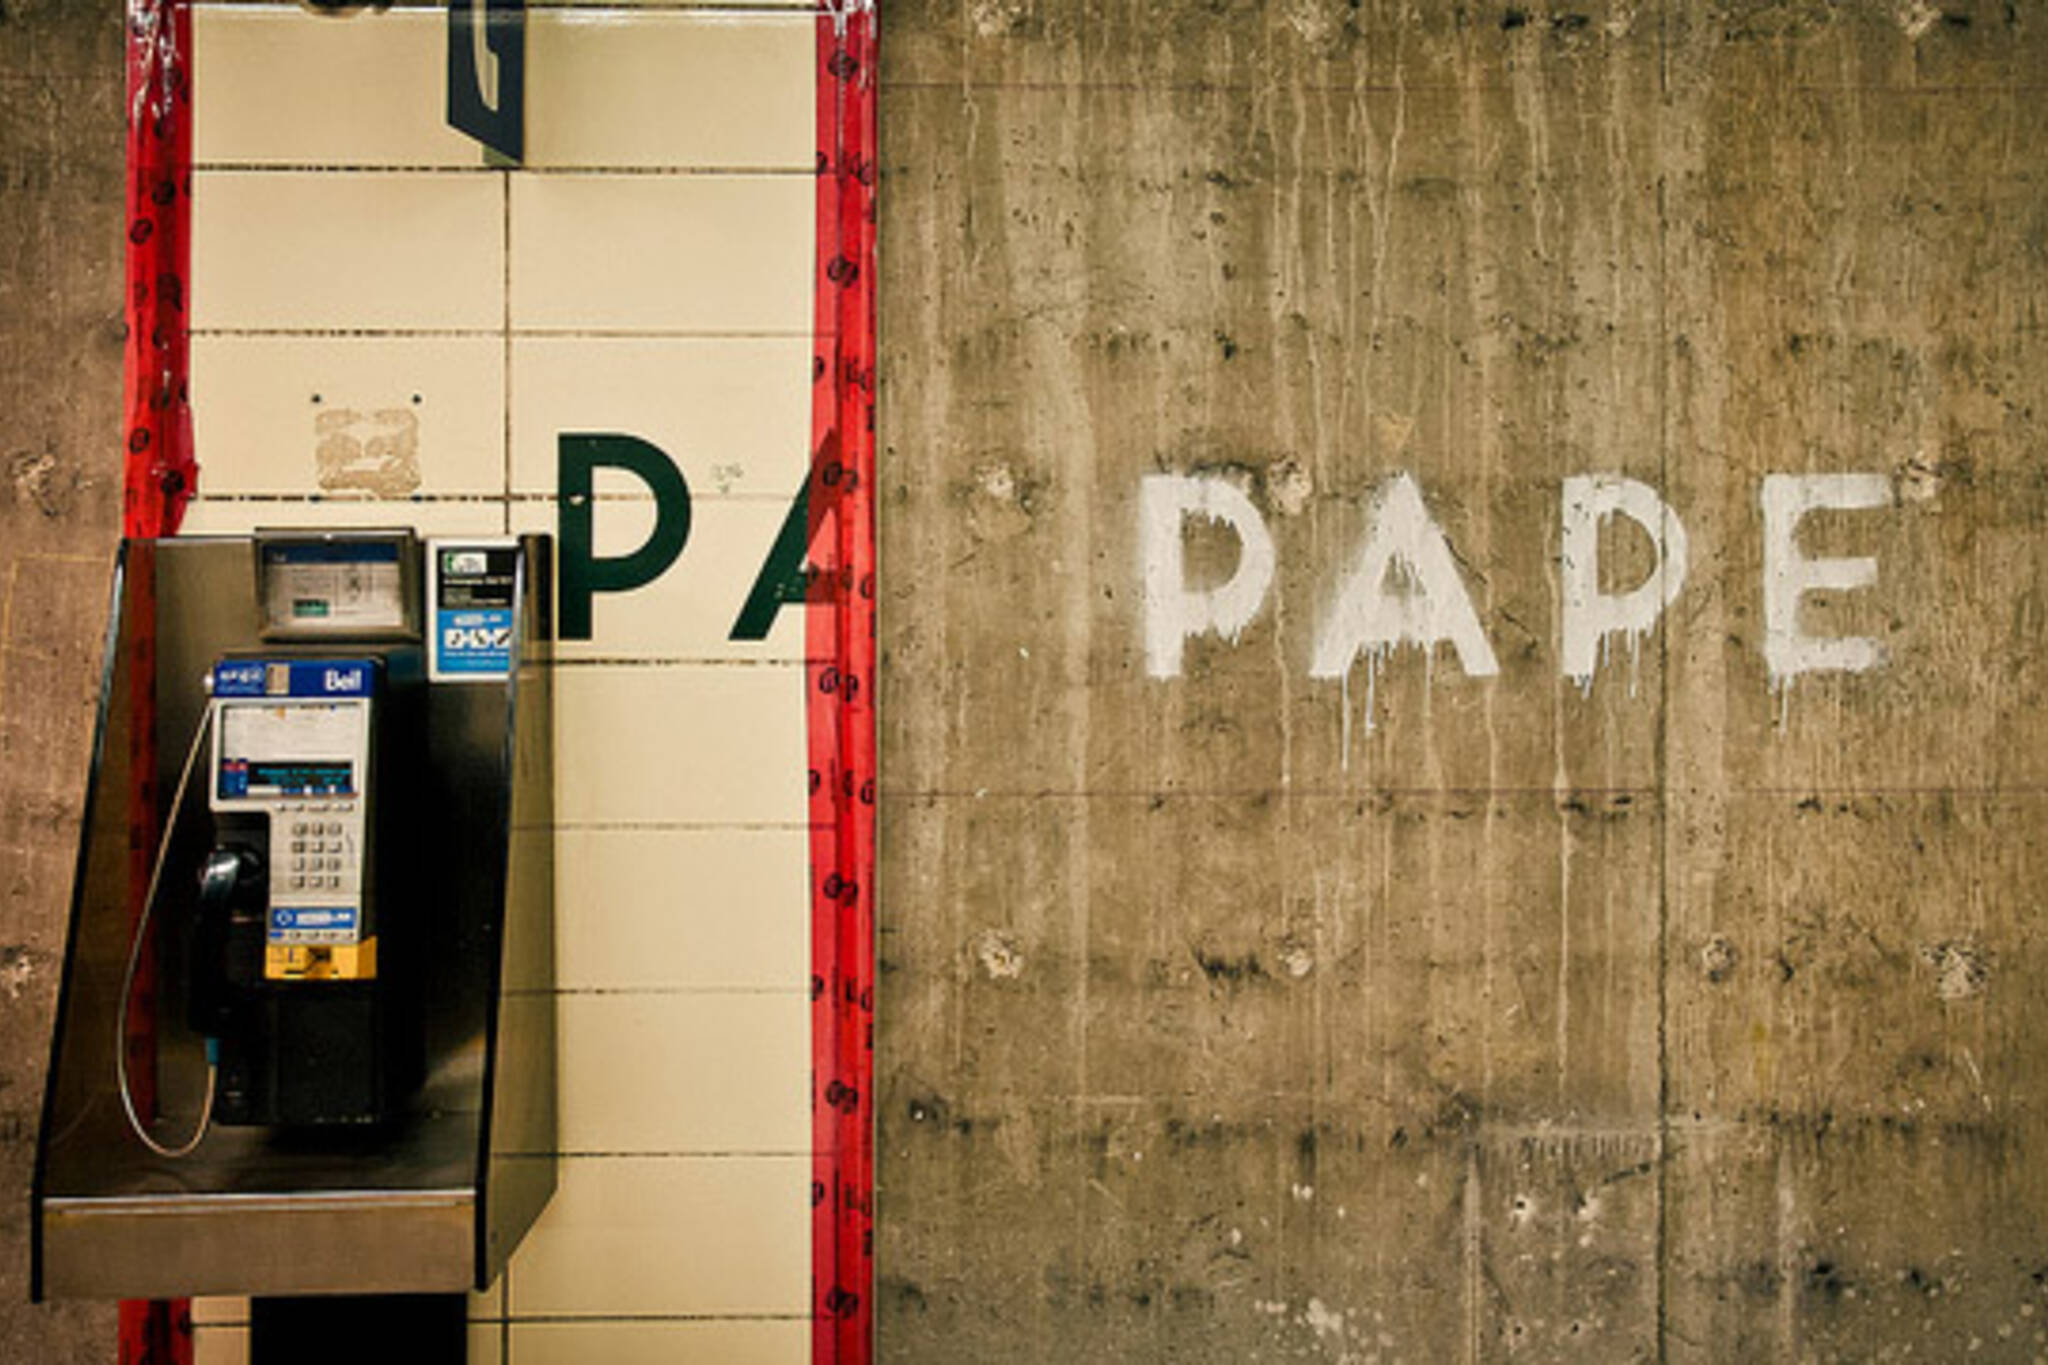 Pape station